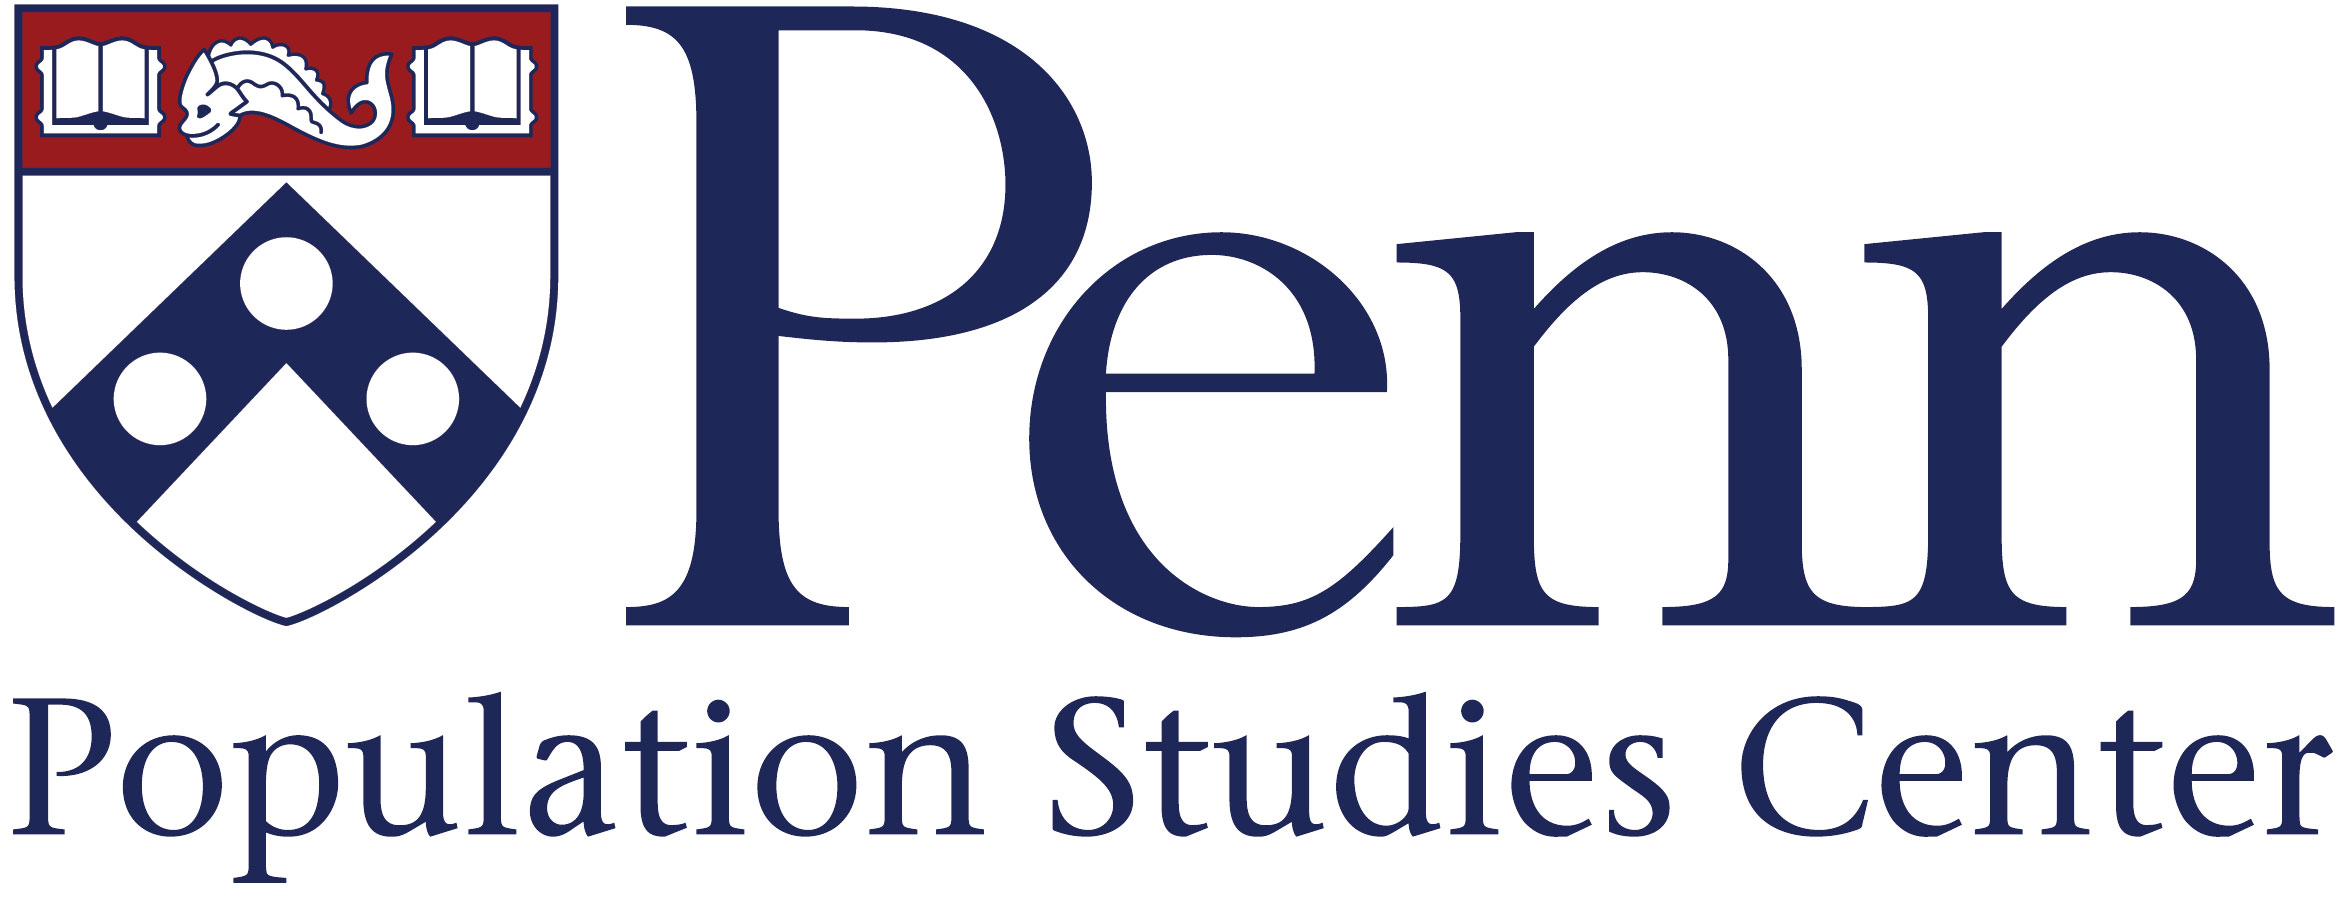 University of Pennsylvania Population Studies Center